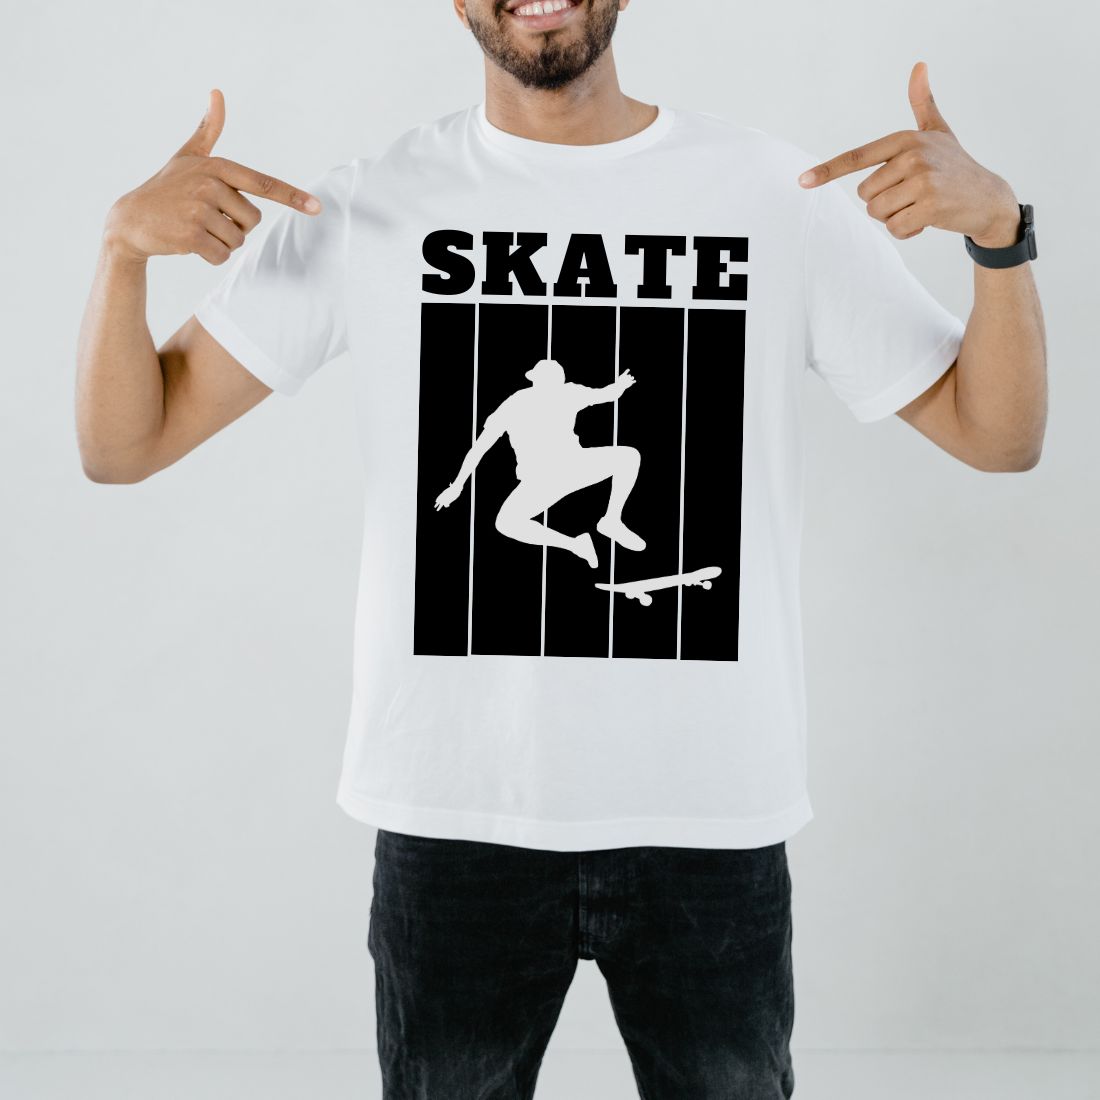 skate t-shirt design preview image.